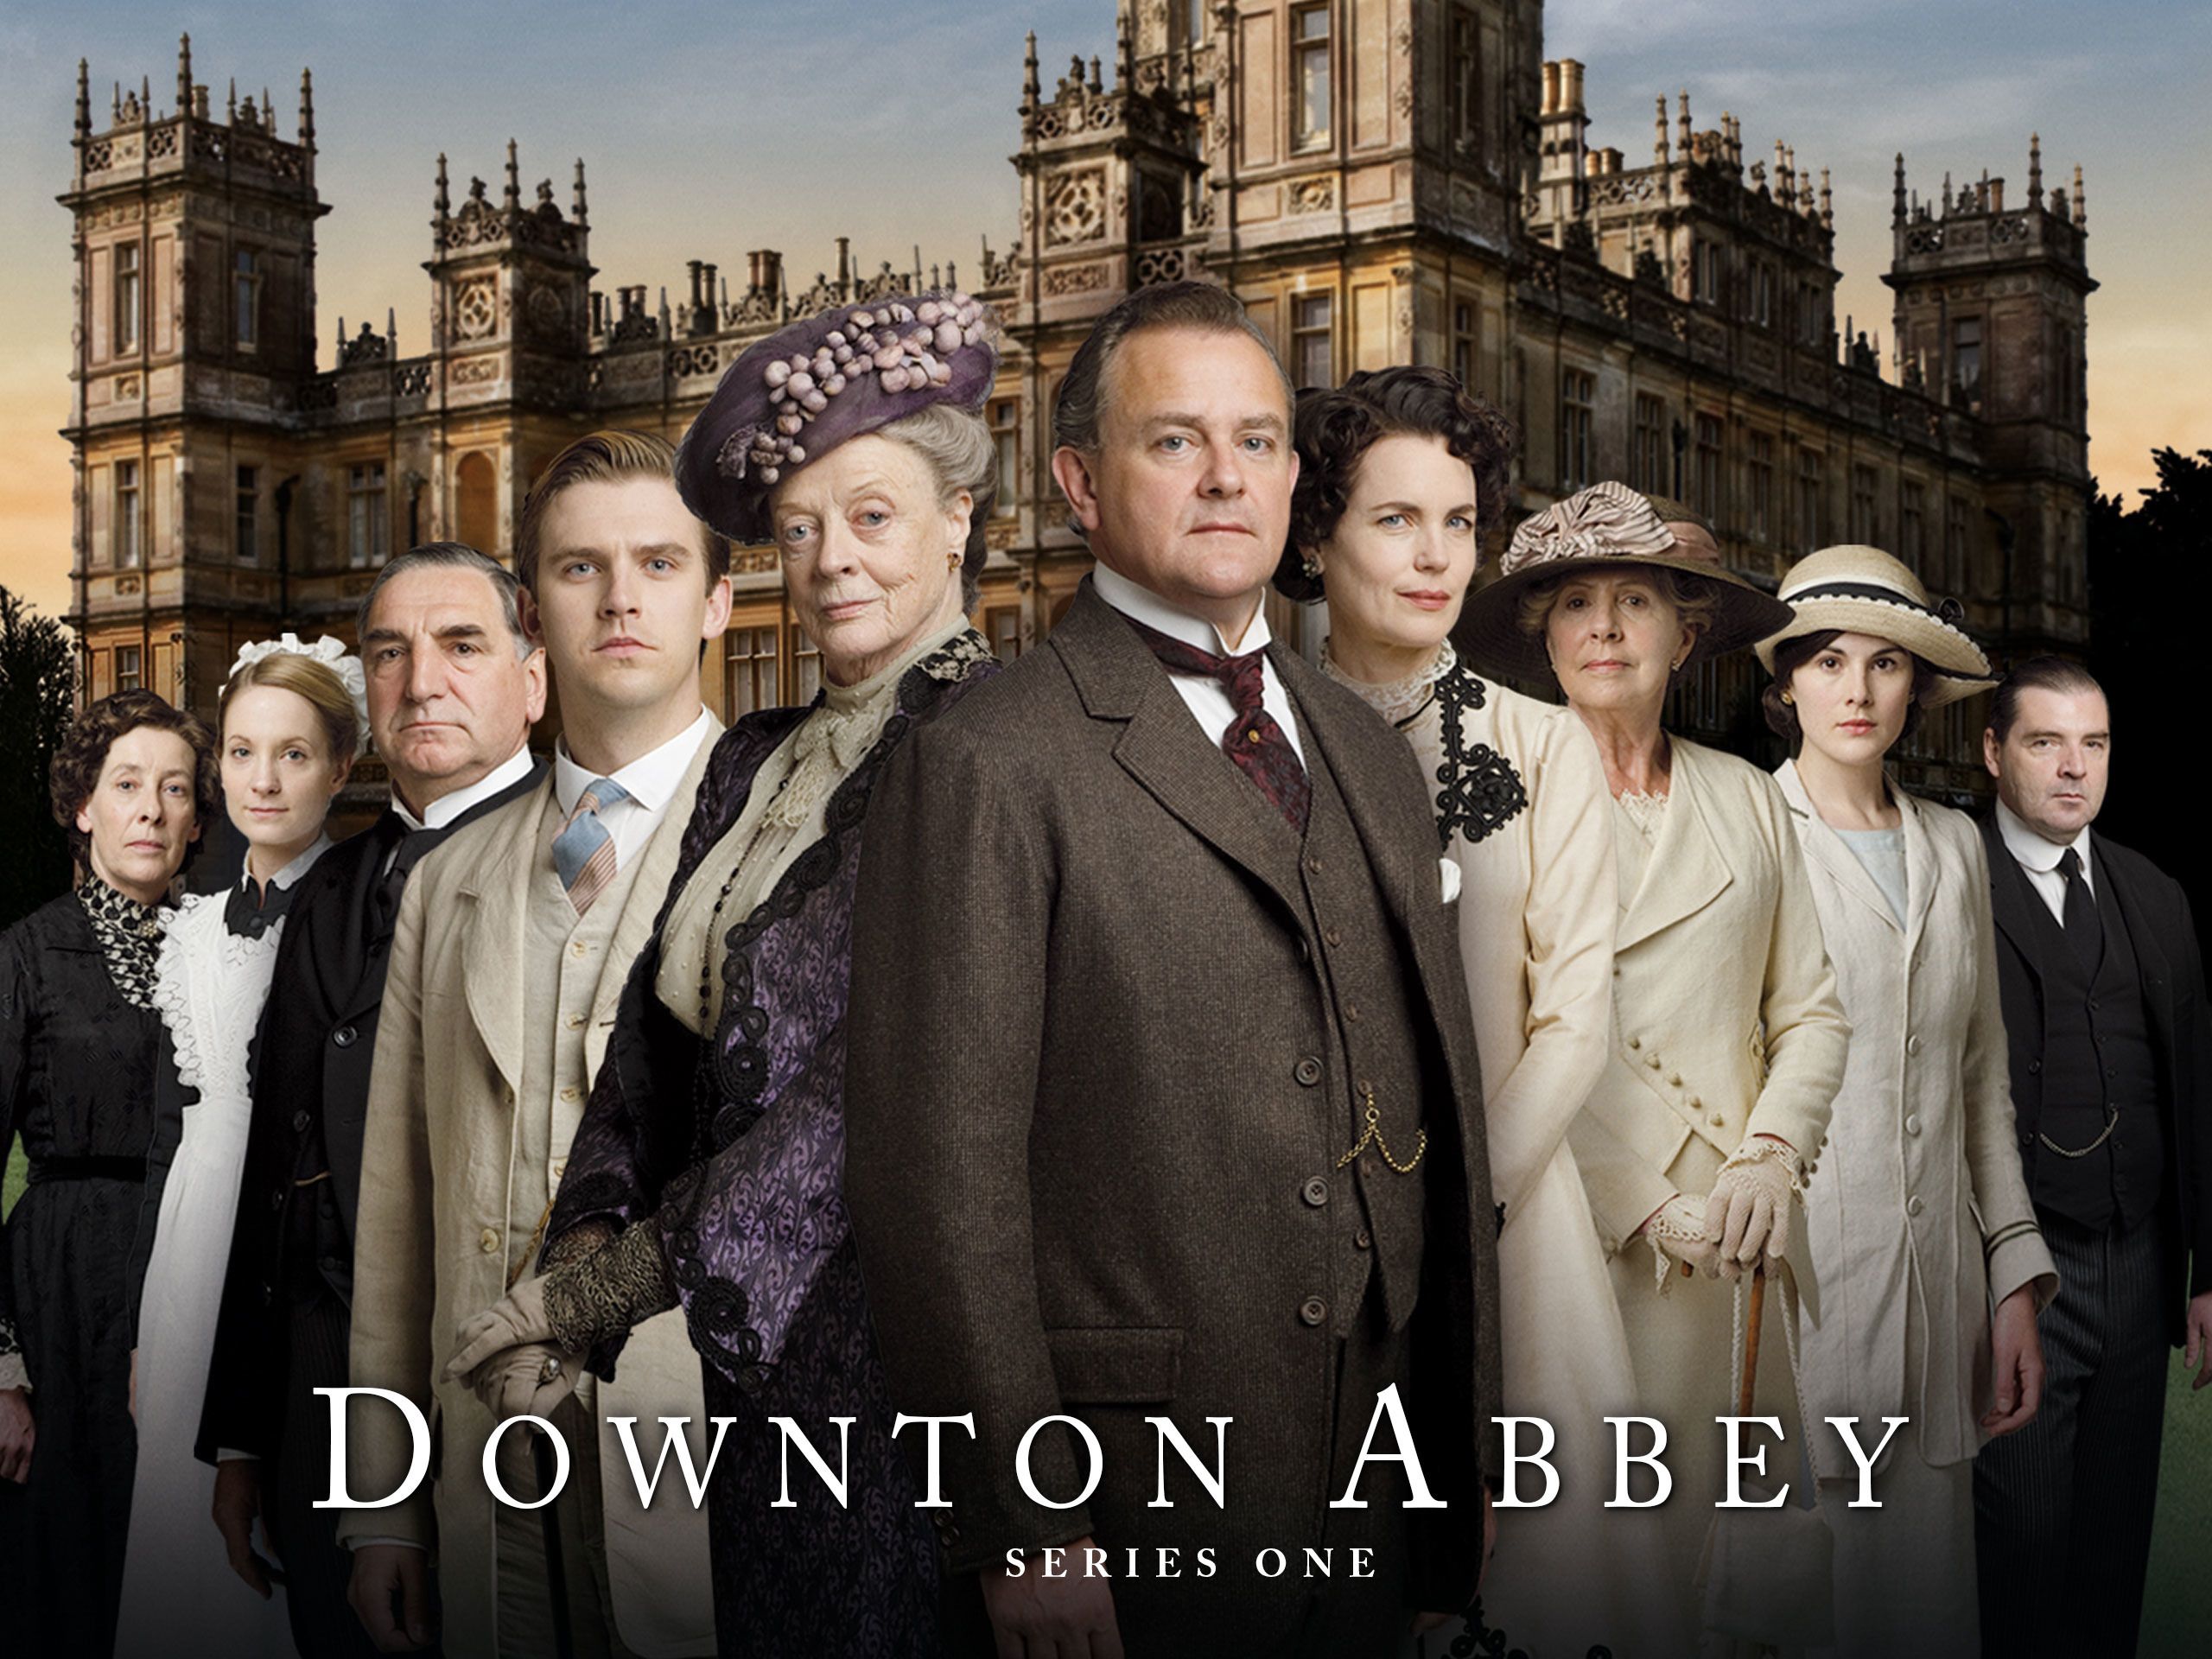 D Nde Ver Downton Abbey En La Serie Se Estrena En Netflix En Espa A Showbiznese Com